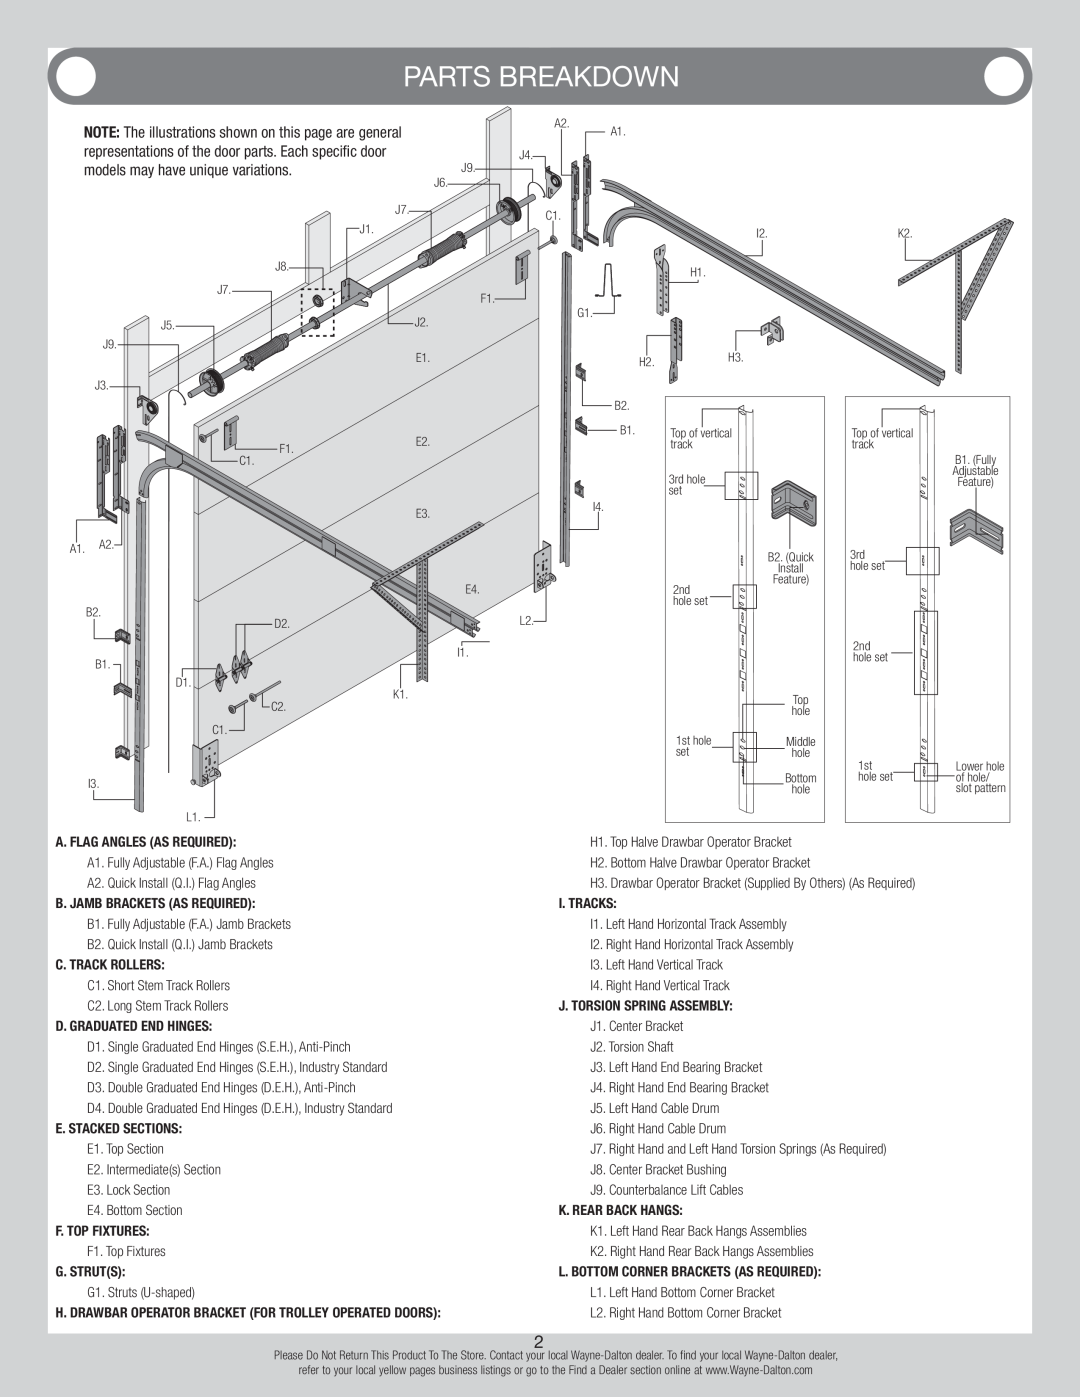 Wayne-Dalton 8700 installation instructions Parts Breakdown 